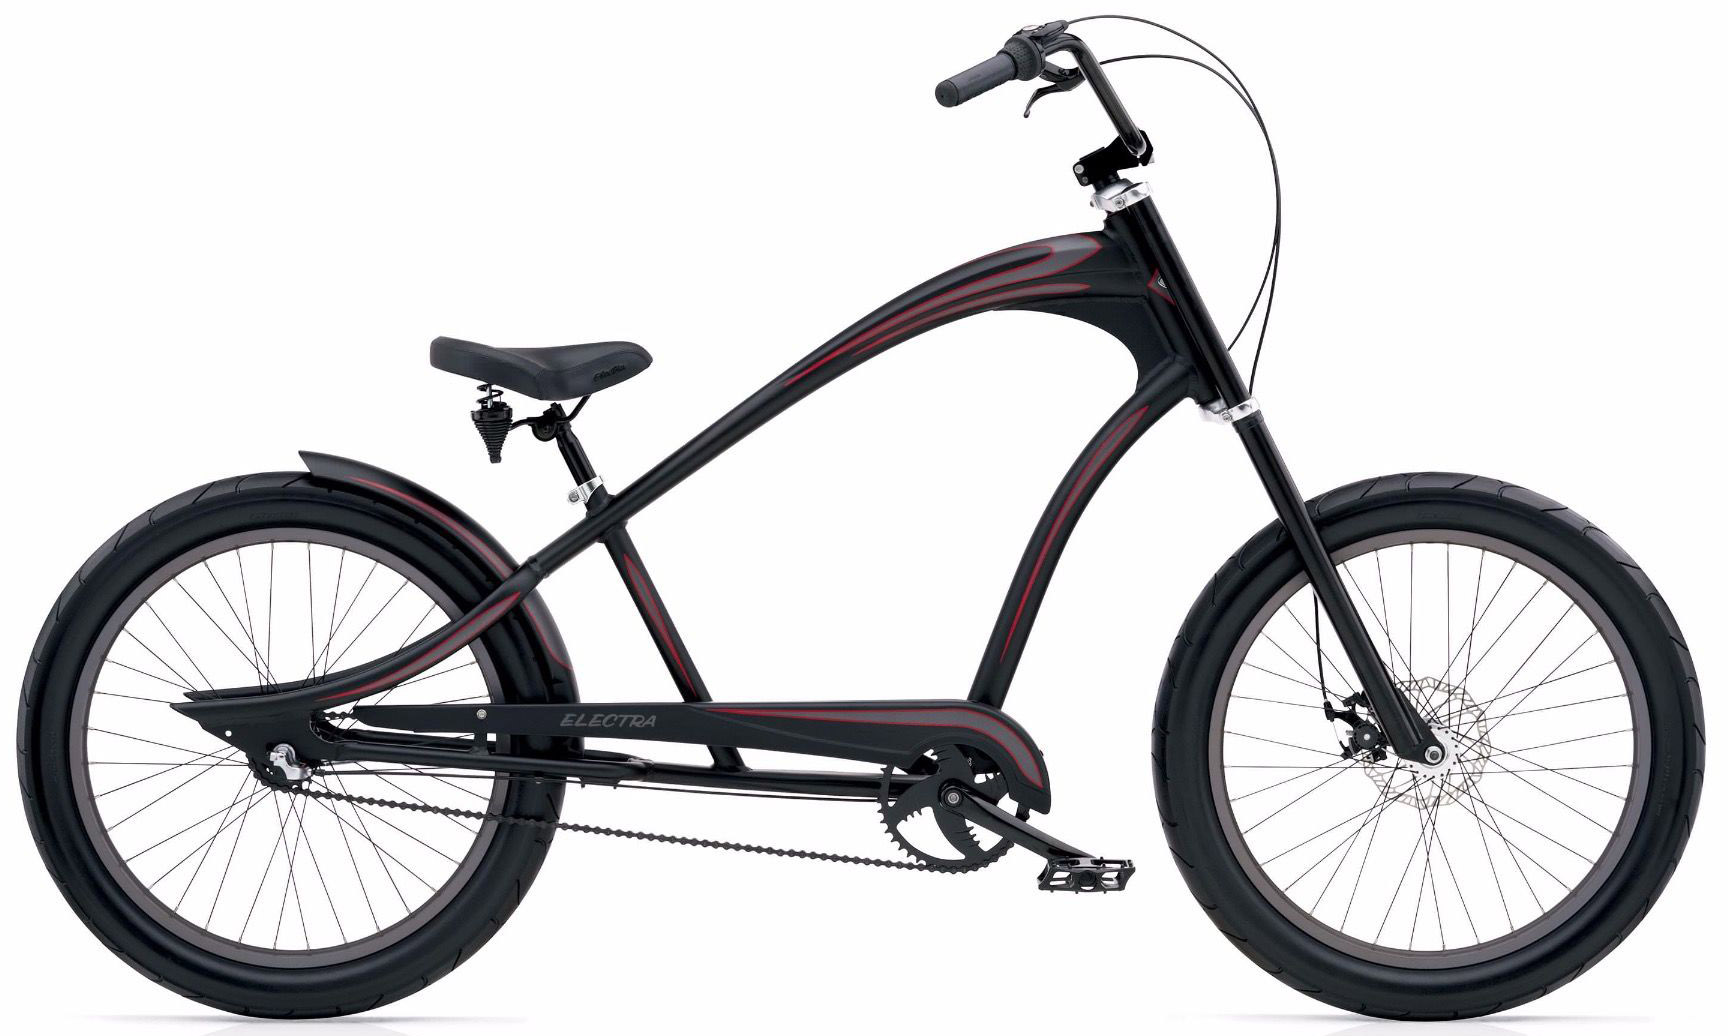  Велосипед Electra Revil 3i 2020